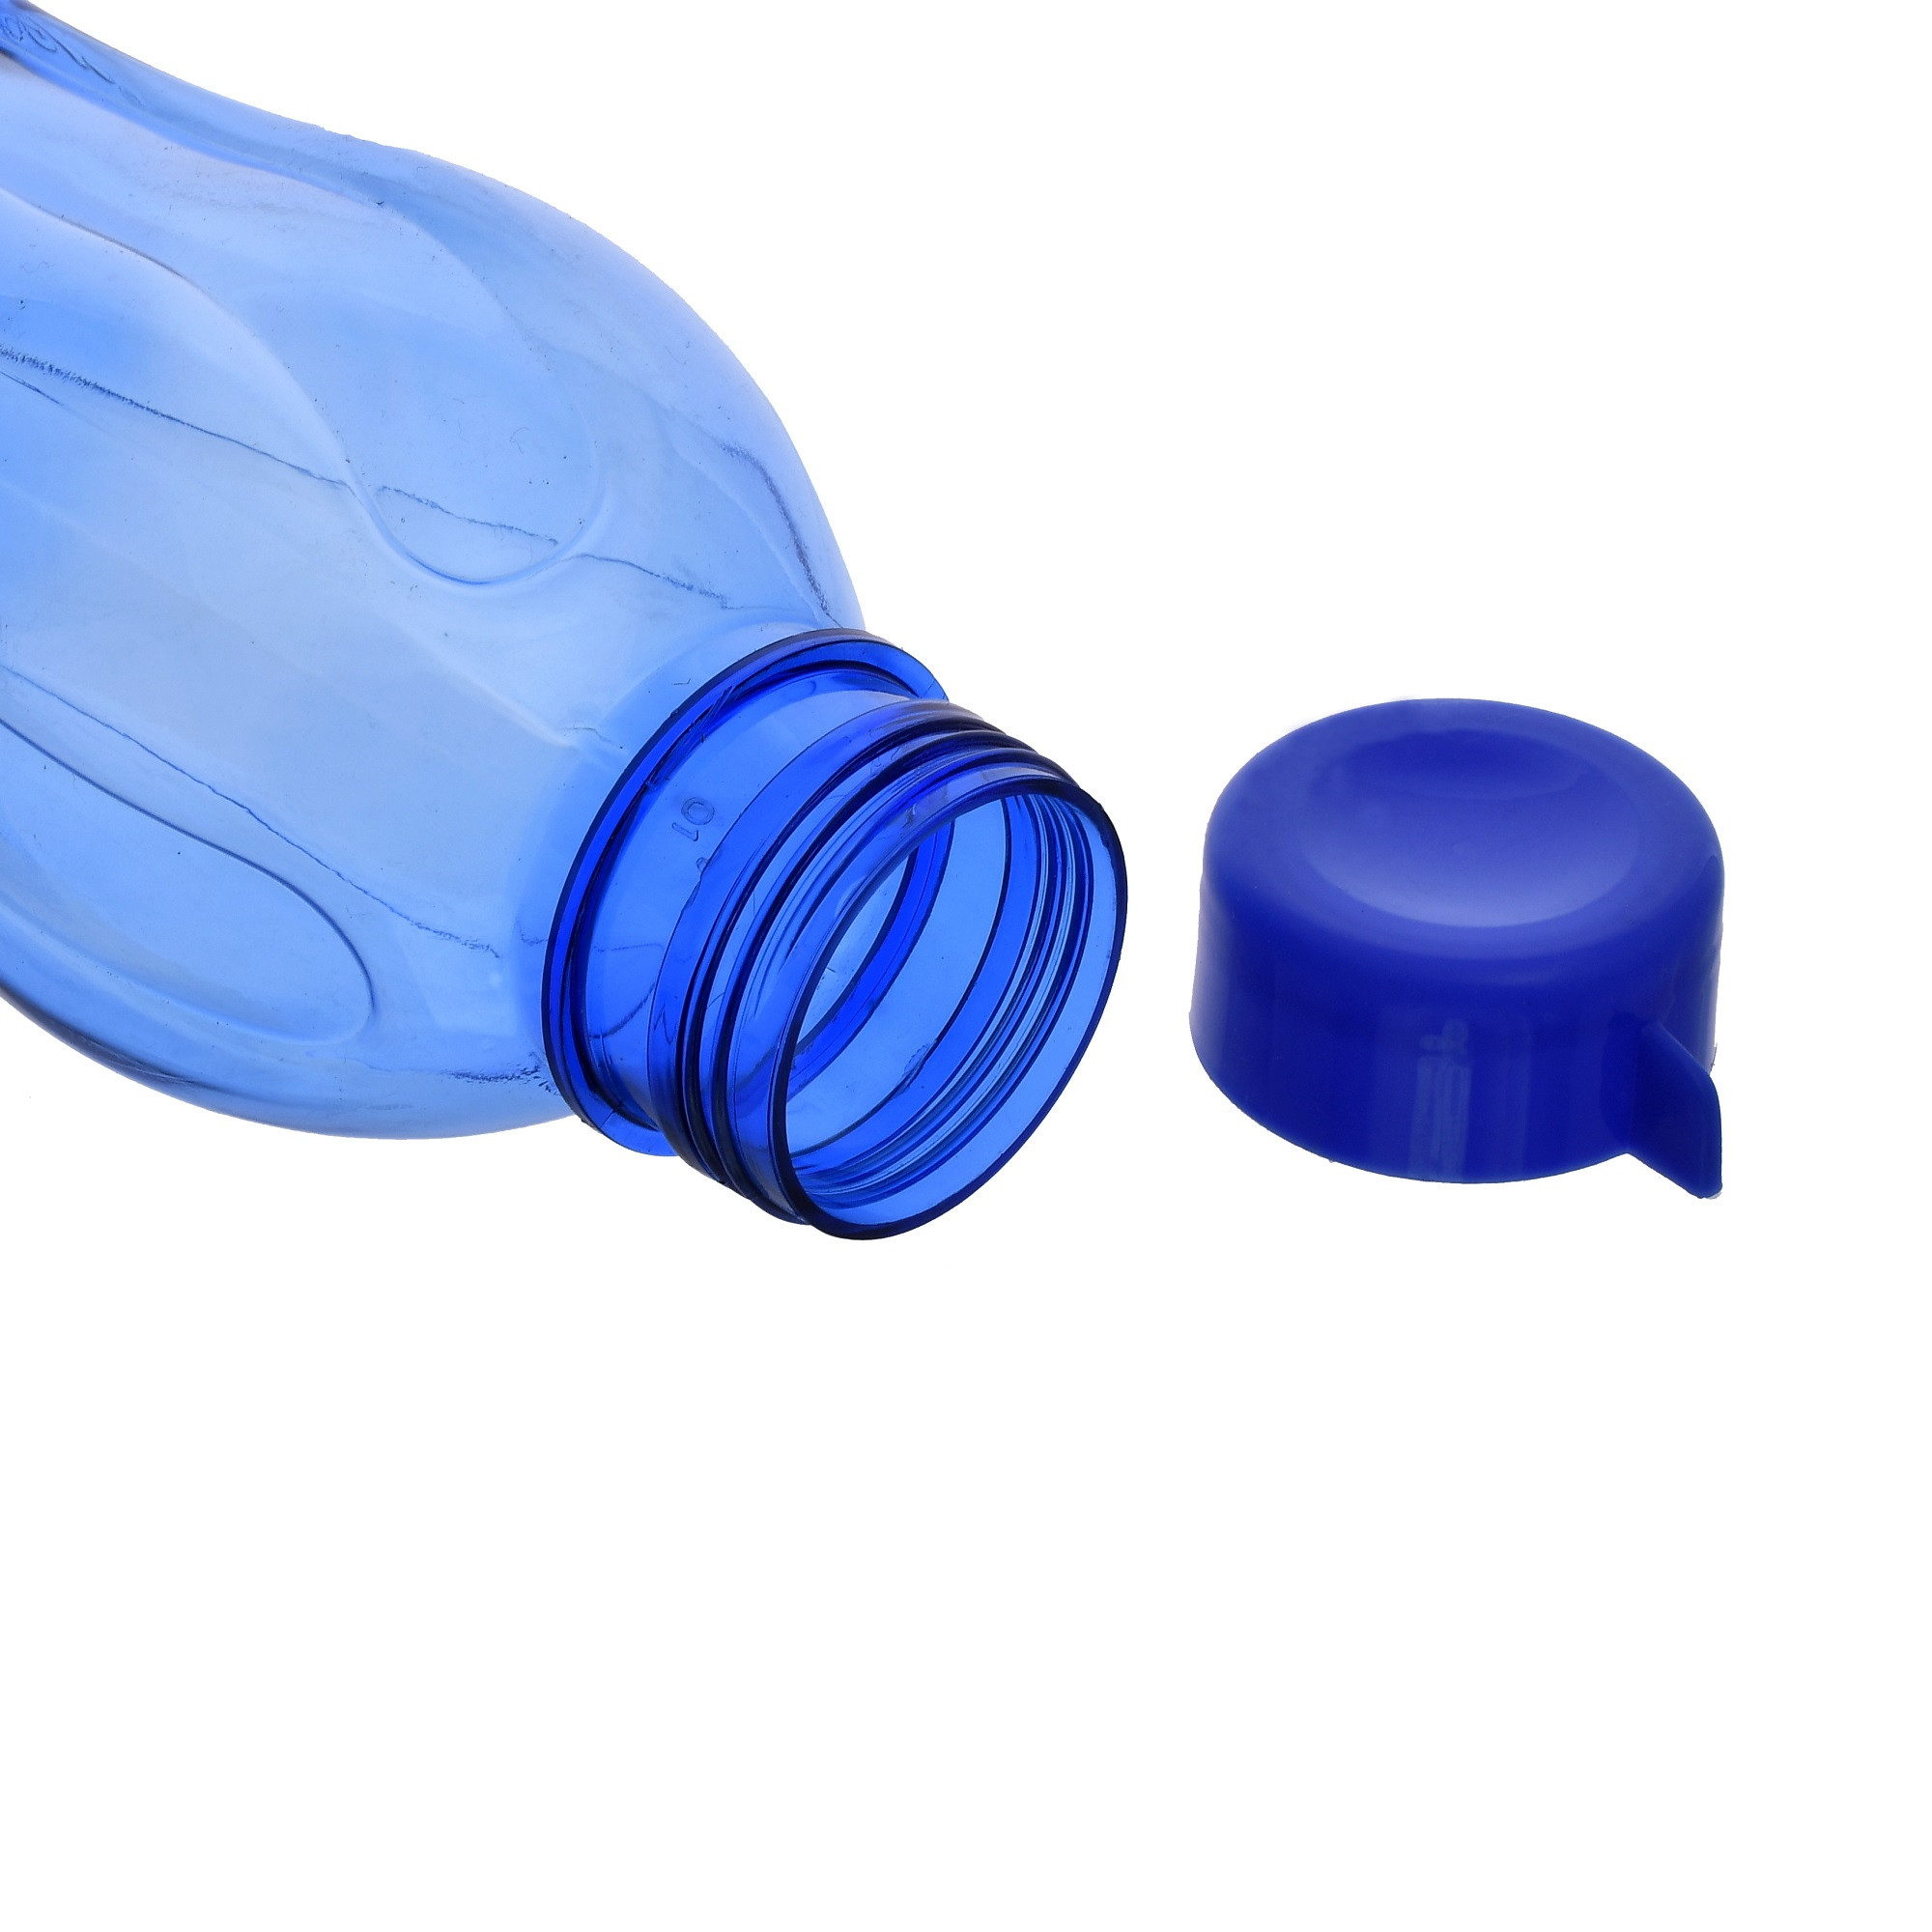 Kuber Industries Plastic Aqua Fridge Water Bottle with Lid (1000ml, Pink & Blue)-KUBMART520